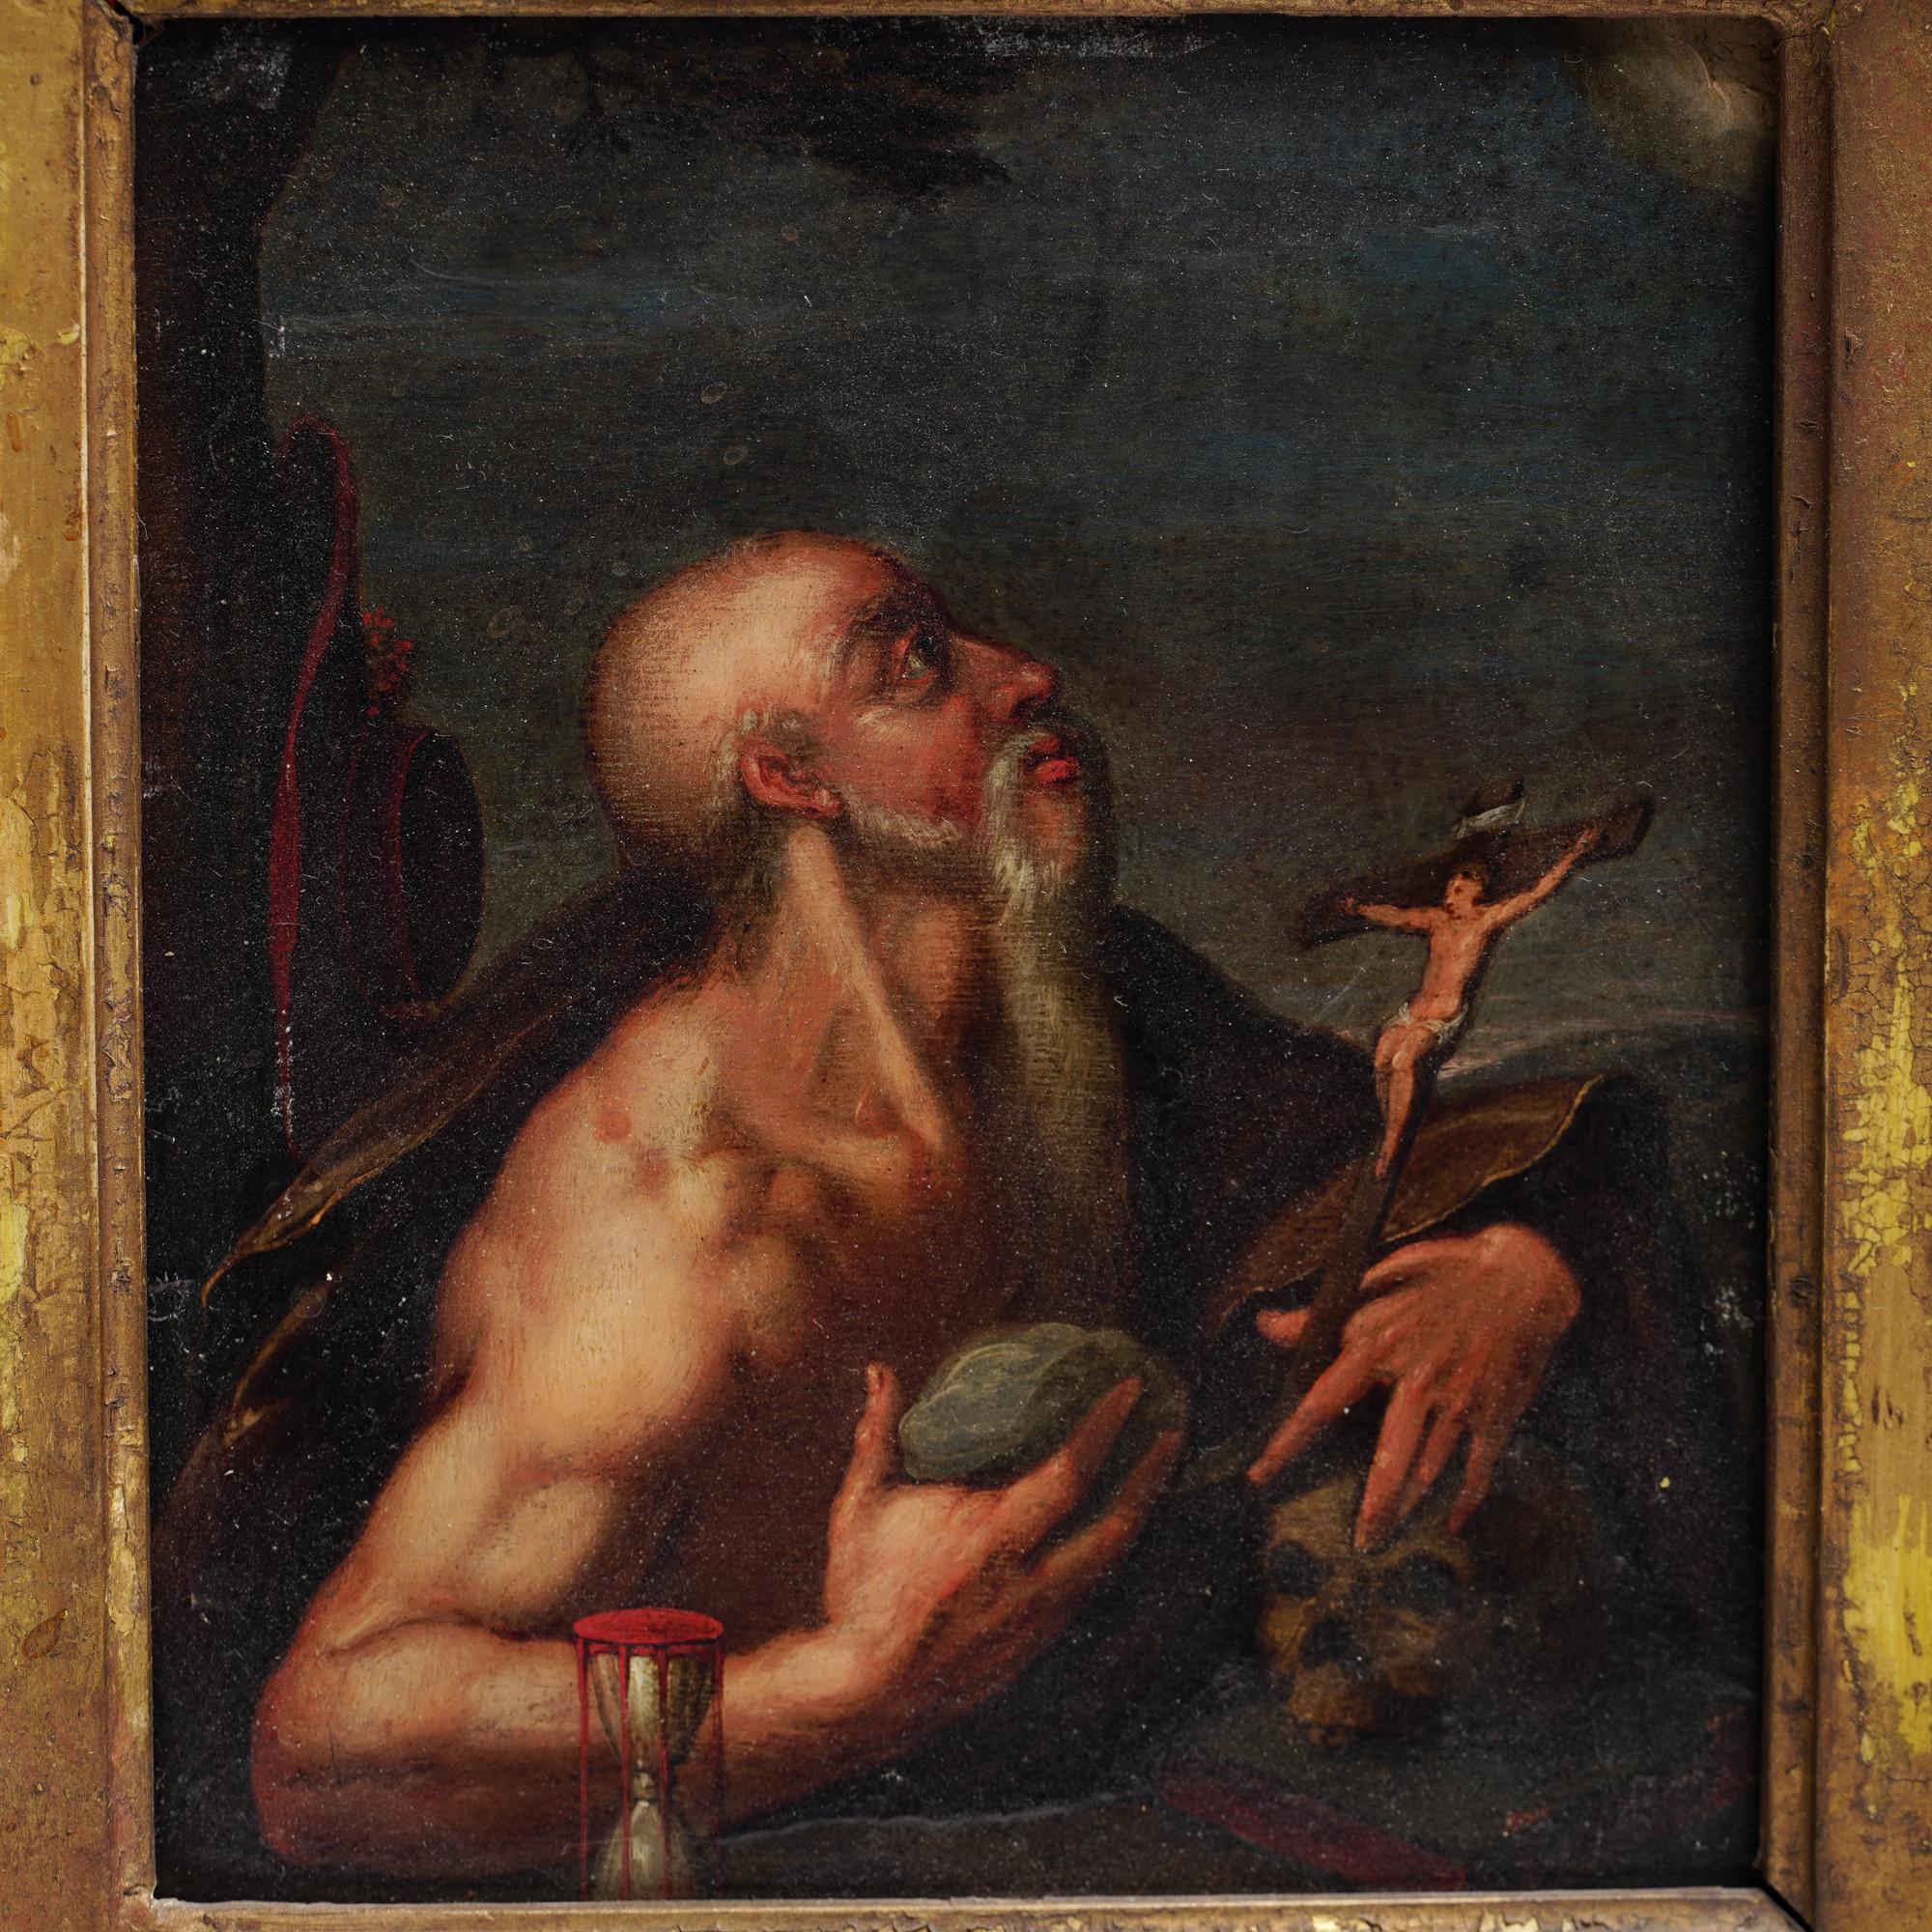 Oiled 17th century oil on copper portrait - St. Jerome For Sale